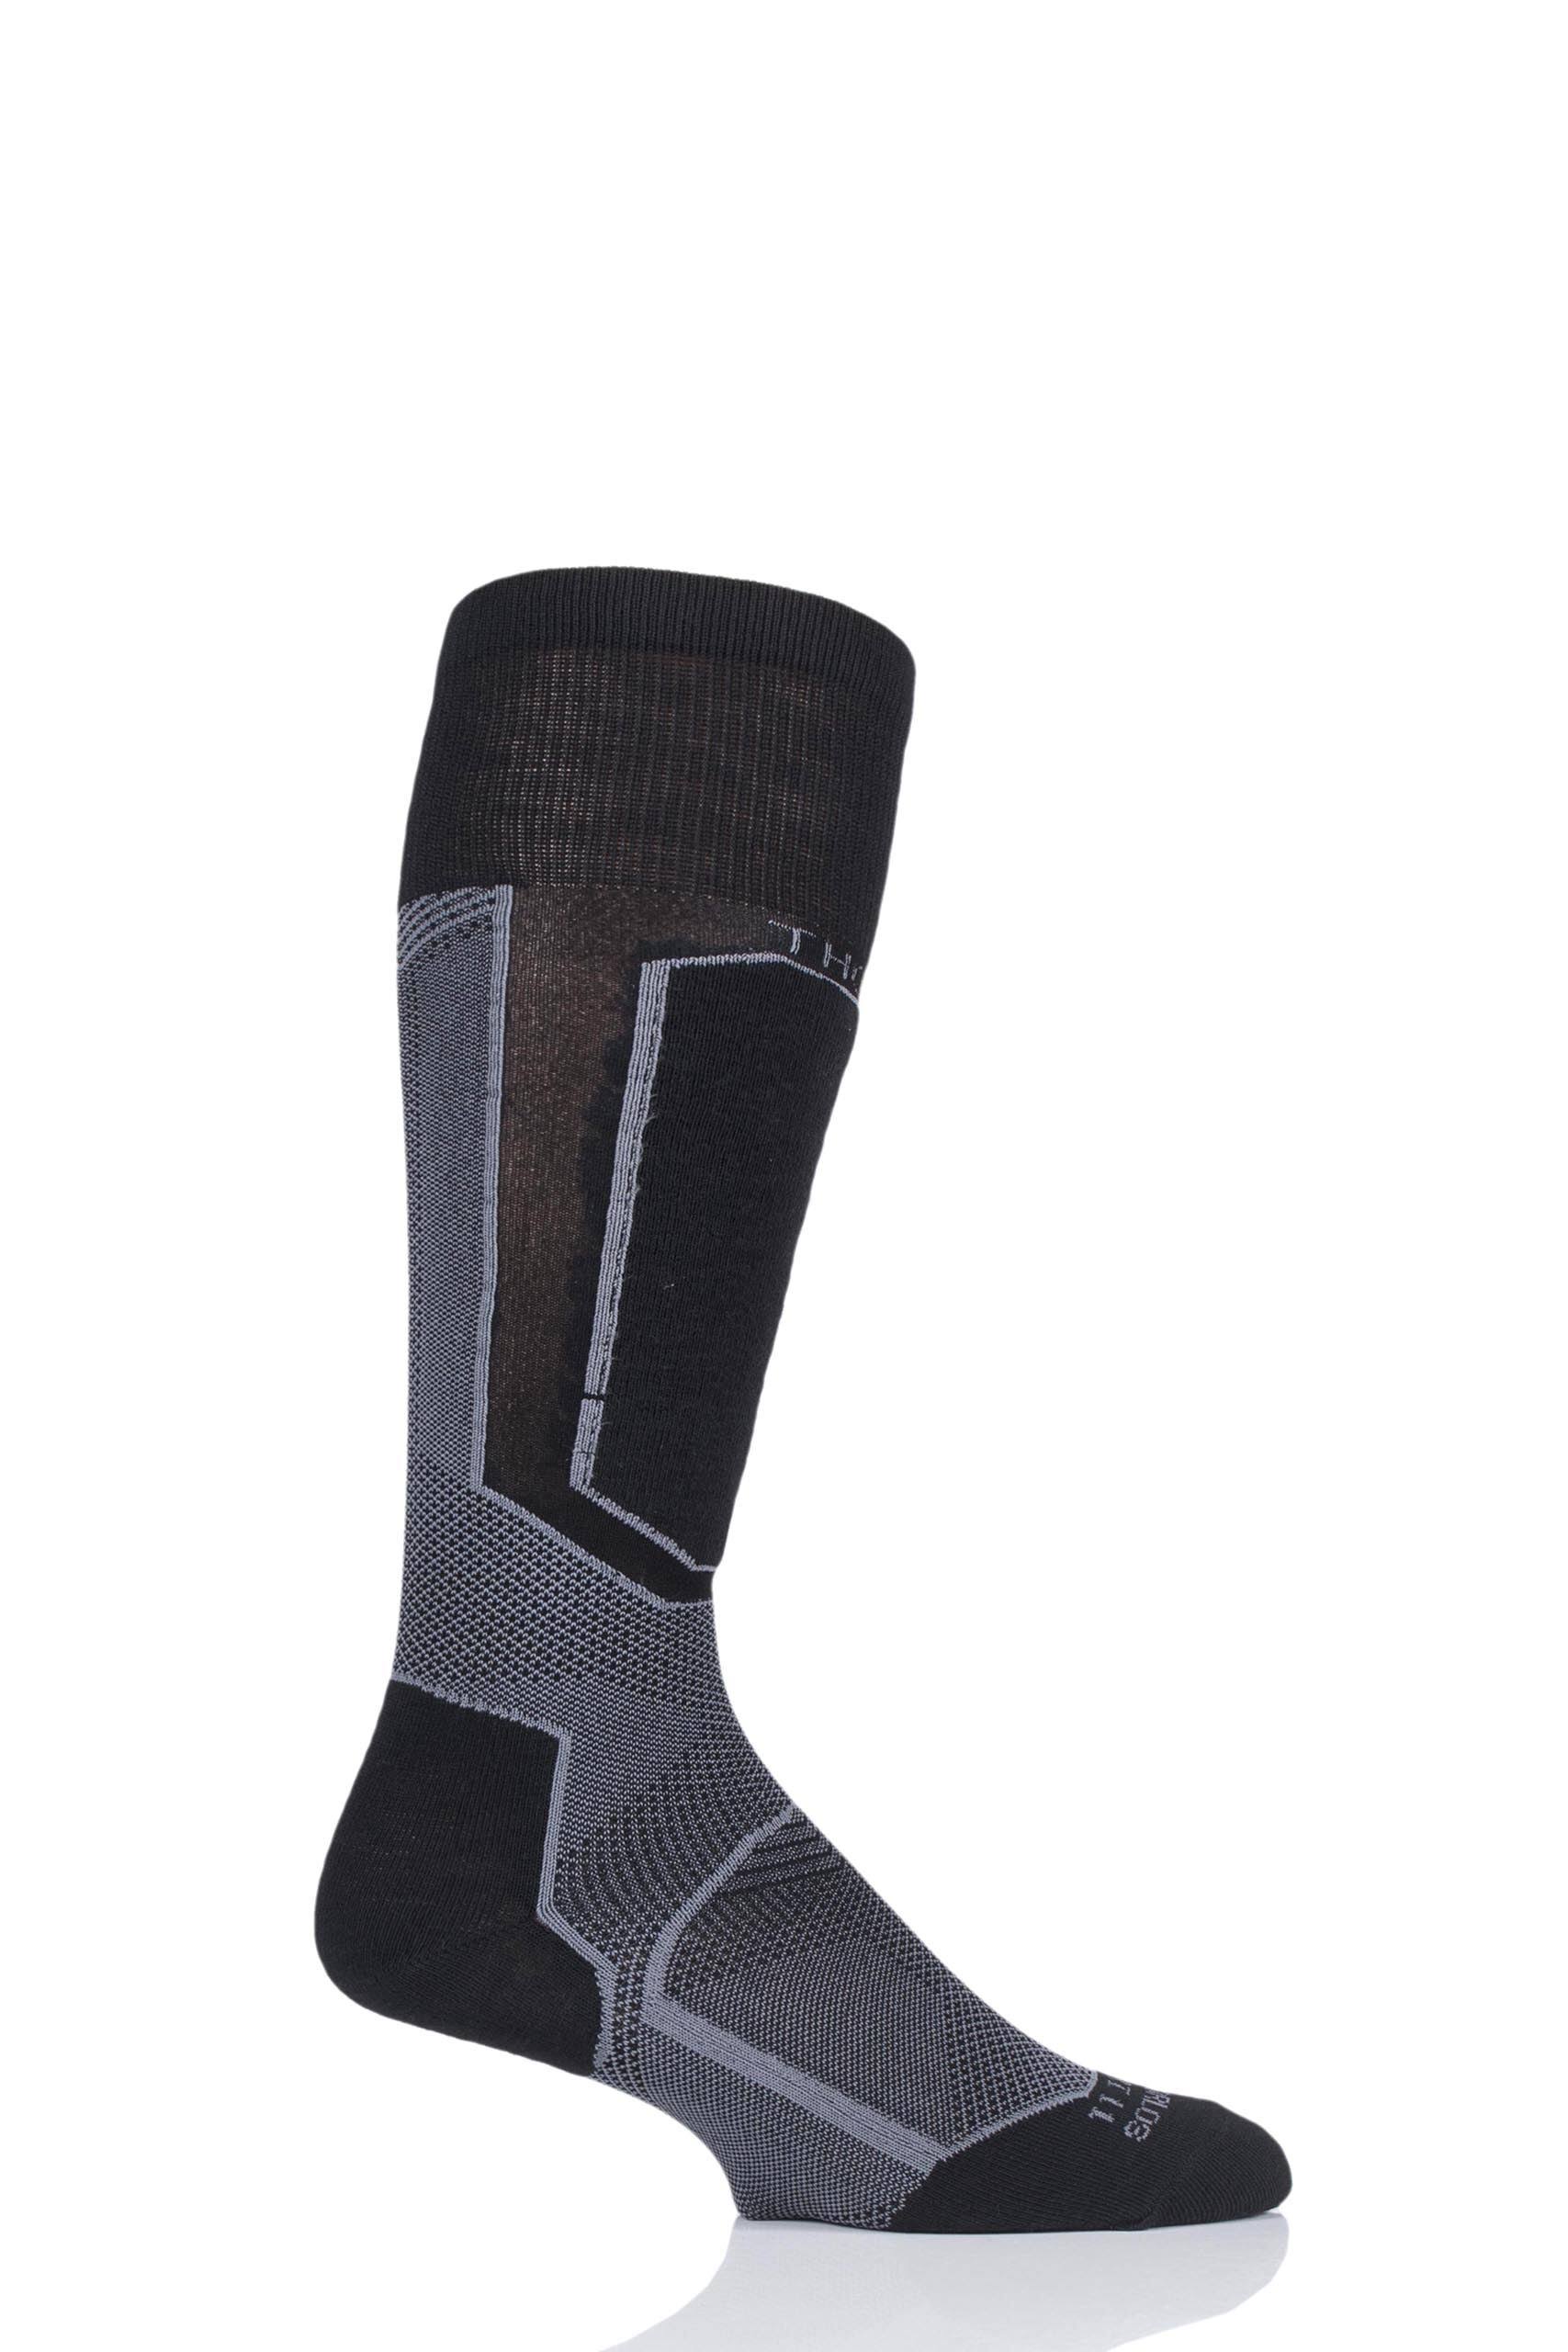 Thorlo Extreme Ski Socks - SS19